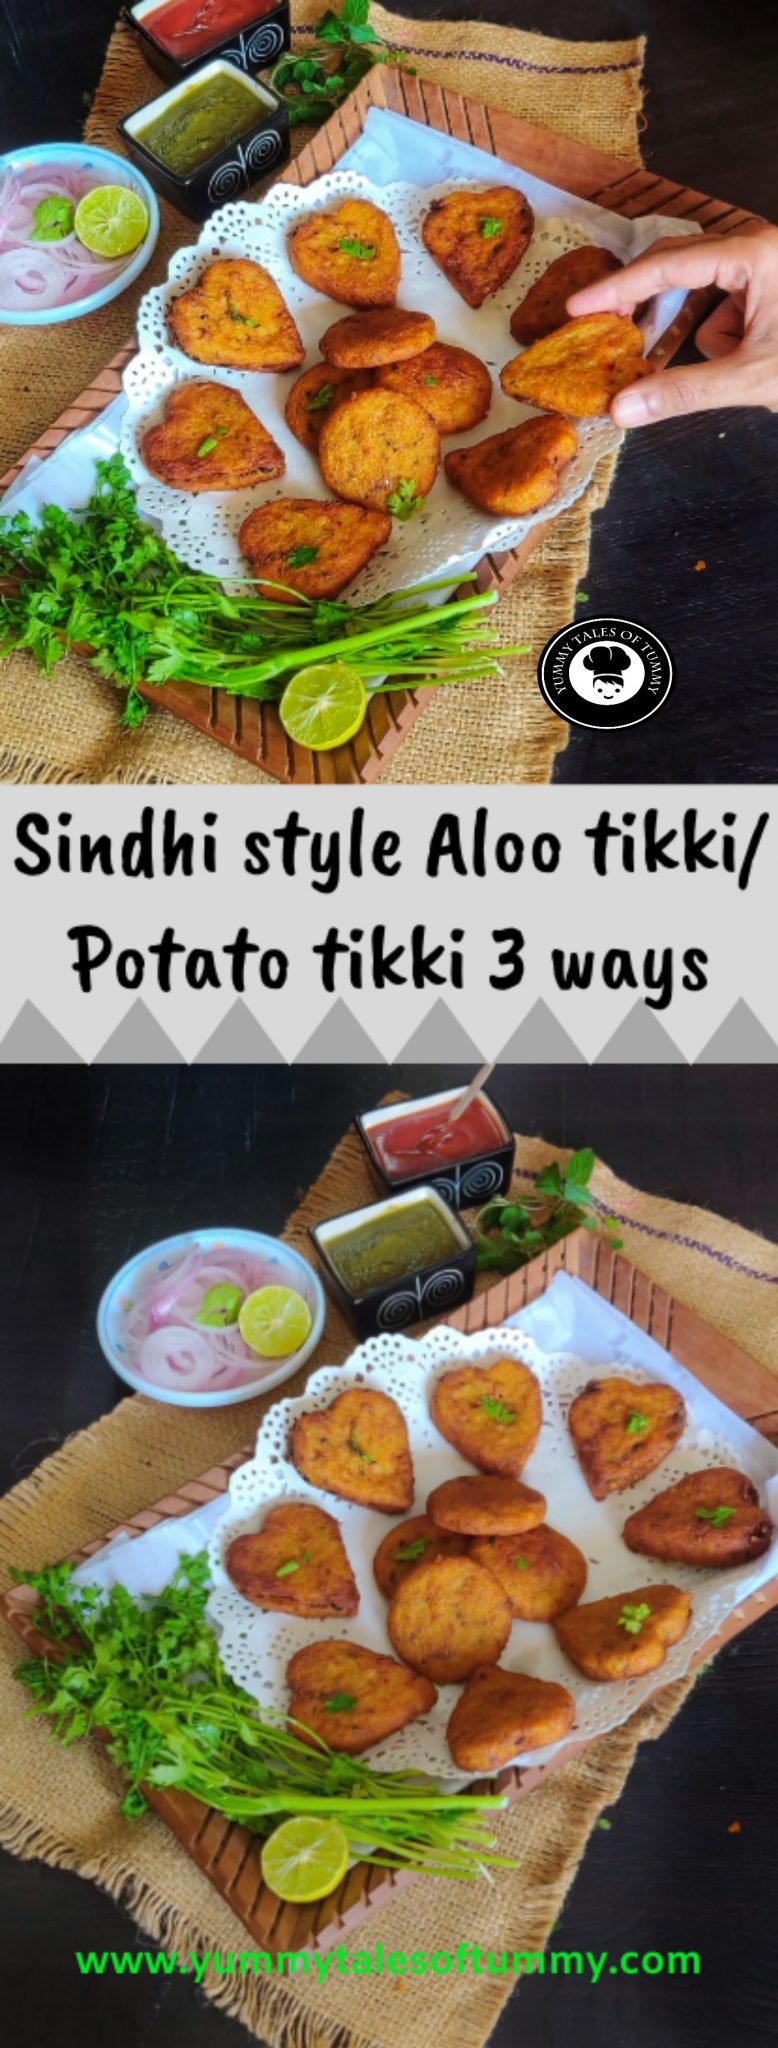 Sindhi style Aloo tikki 3 ways